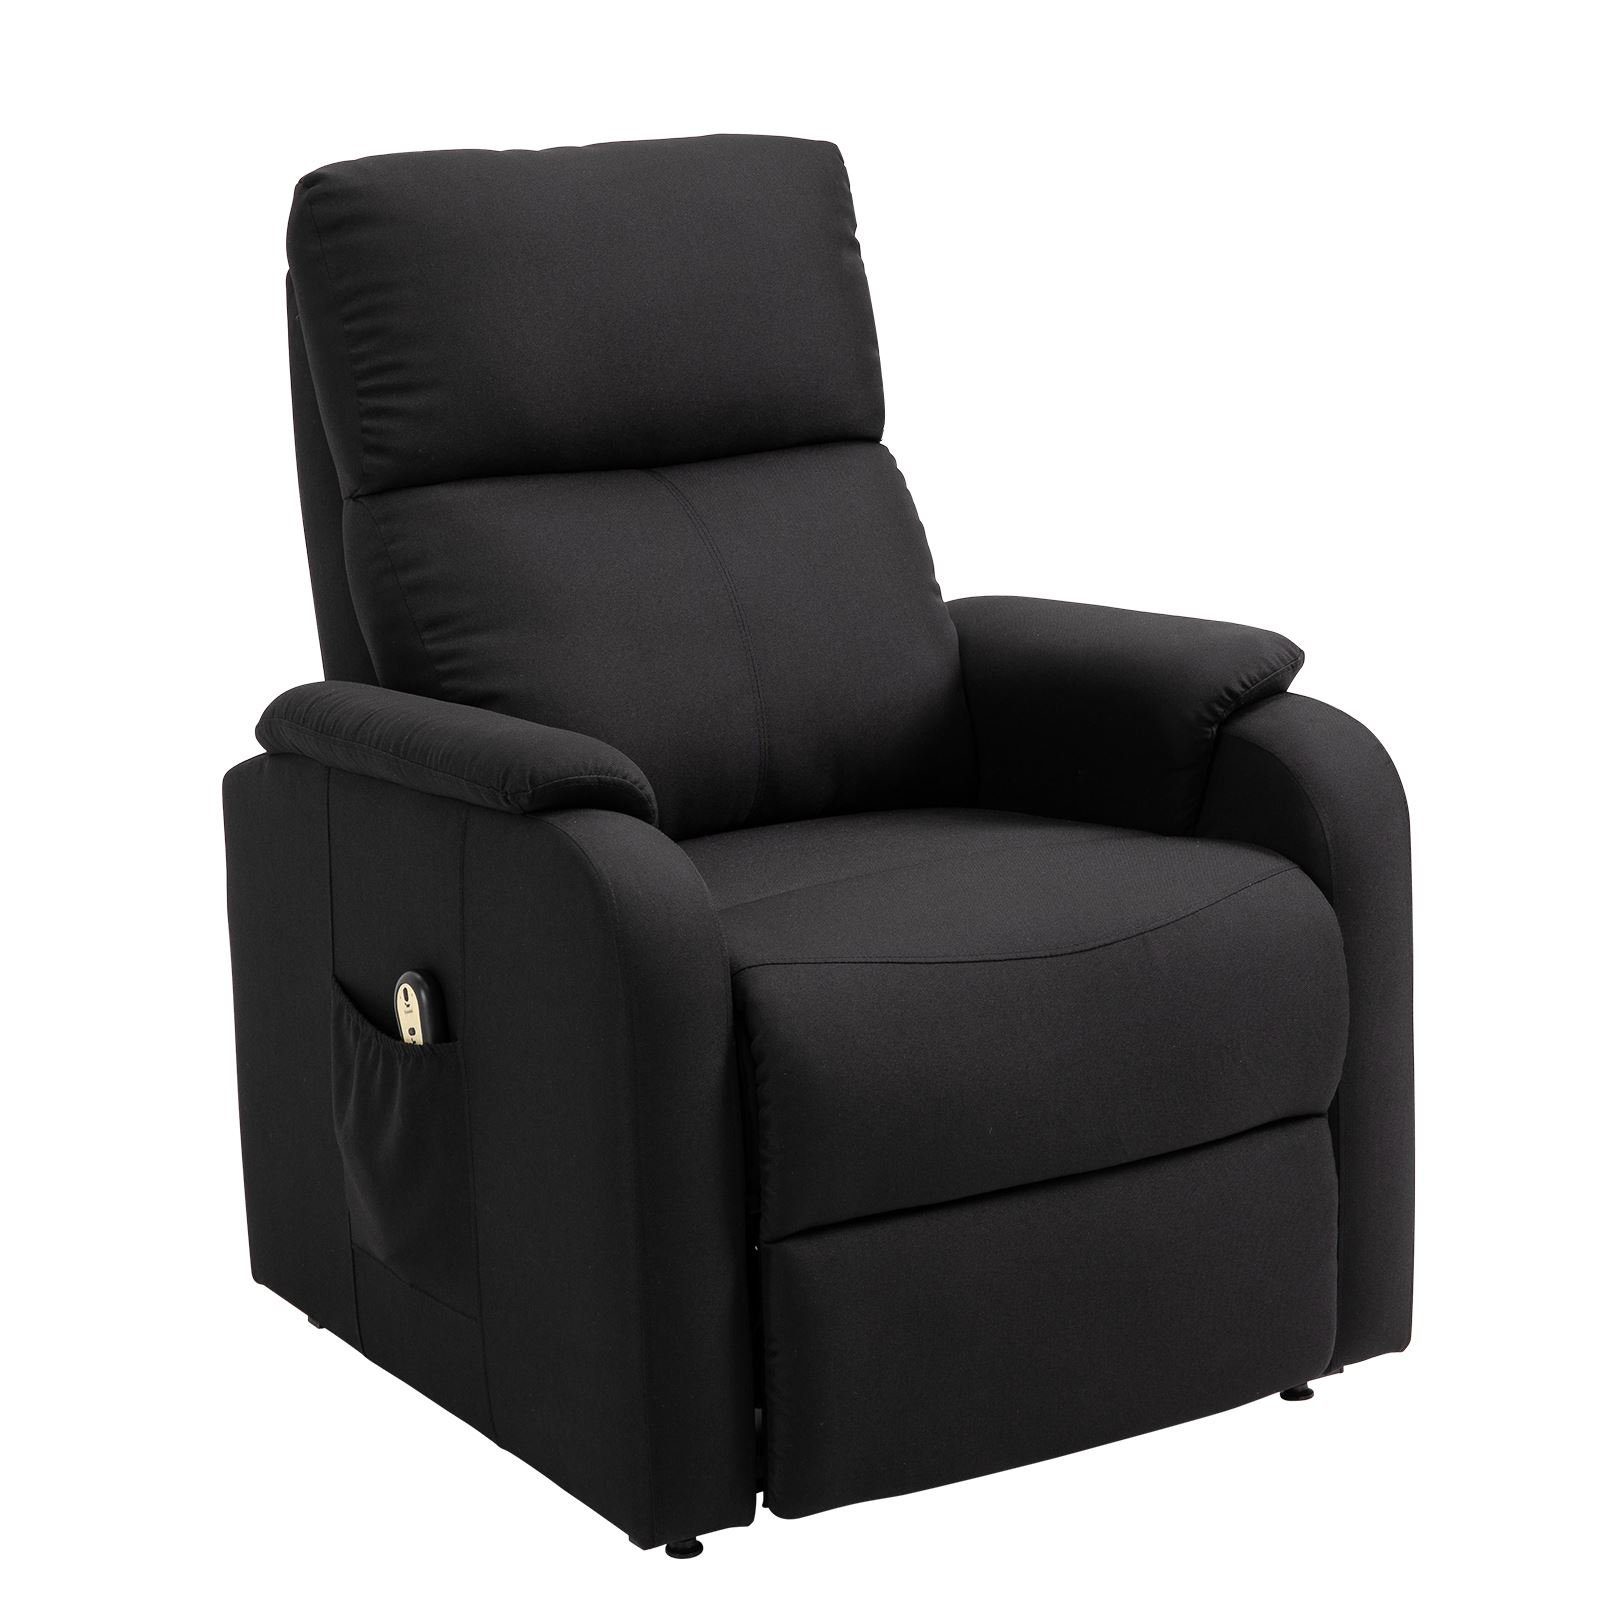 CARO-Möbel schwarz mit Ruhe elektrisc TV-Sessel Aufstehfunktion TV Relaxsessel Fernsehsessel Sessel RETIRE,